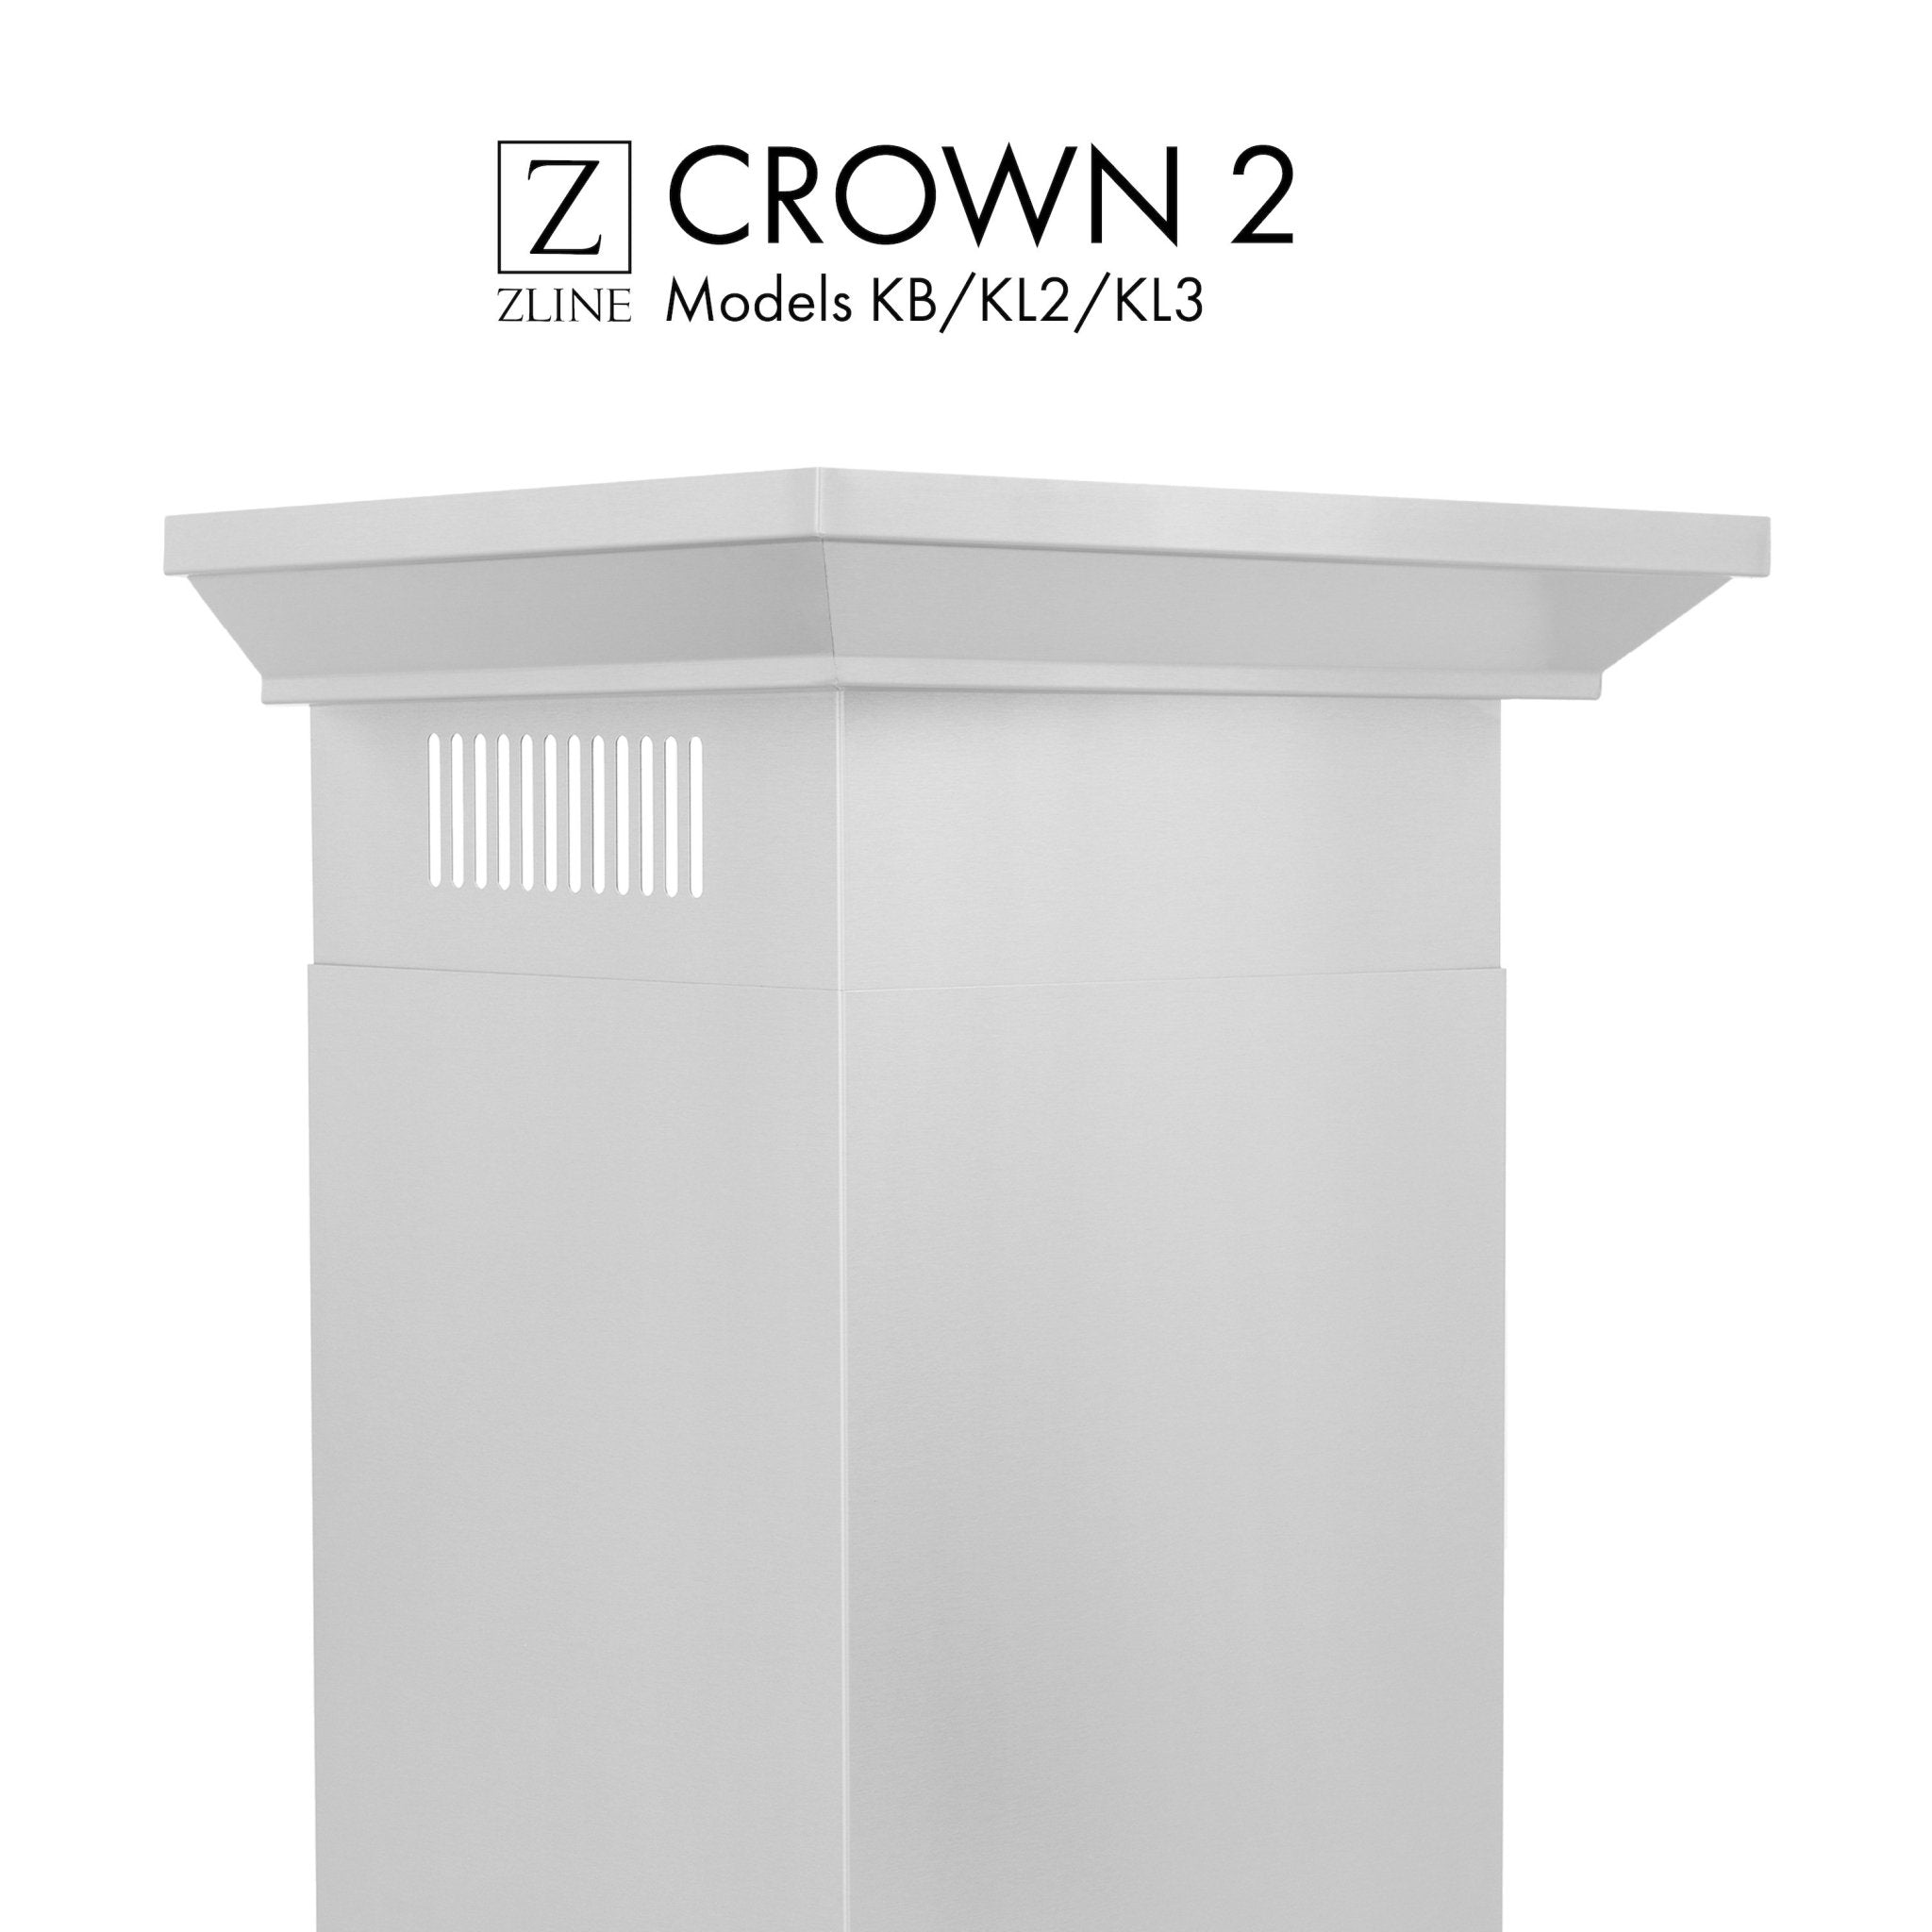 ZLINE Crown Molding #2 For Wall Range Hoods (CM2-KB/KL2/KL3) - Rustic Kitchen & Bath - Range Hood Accessories - ZLINE Kitchen and Bath